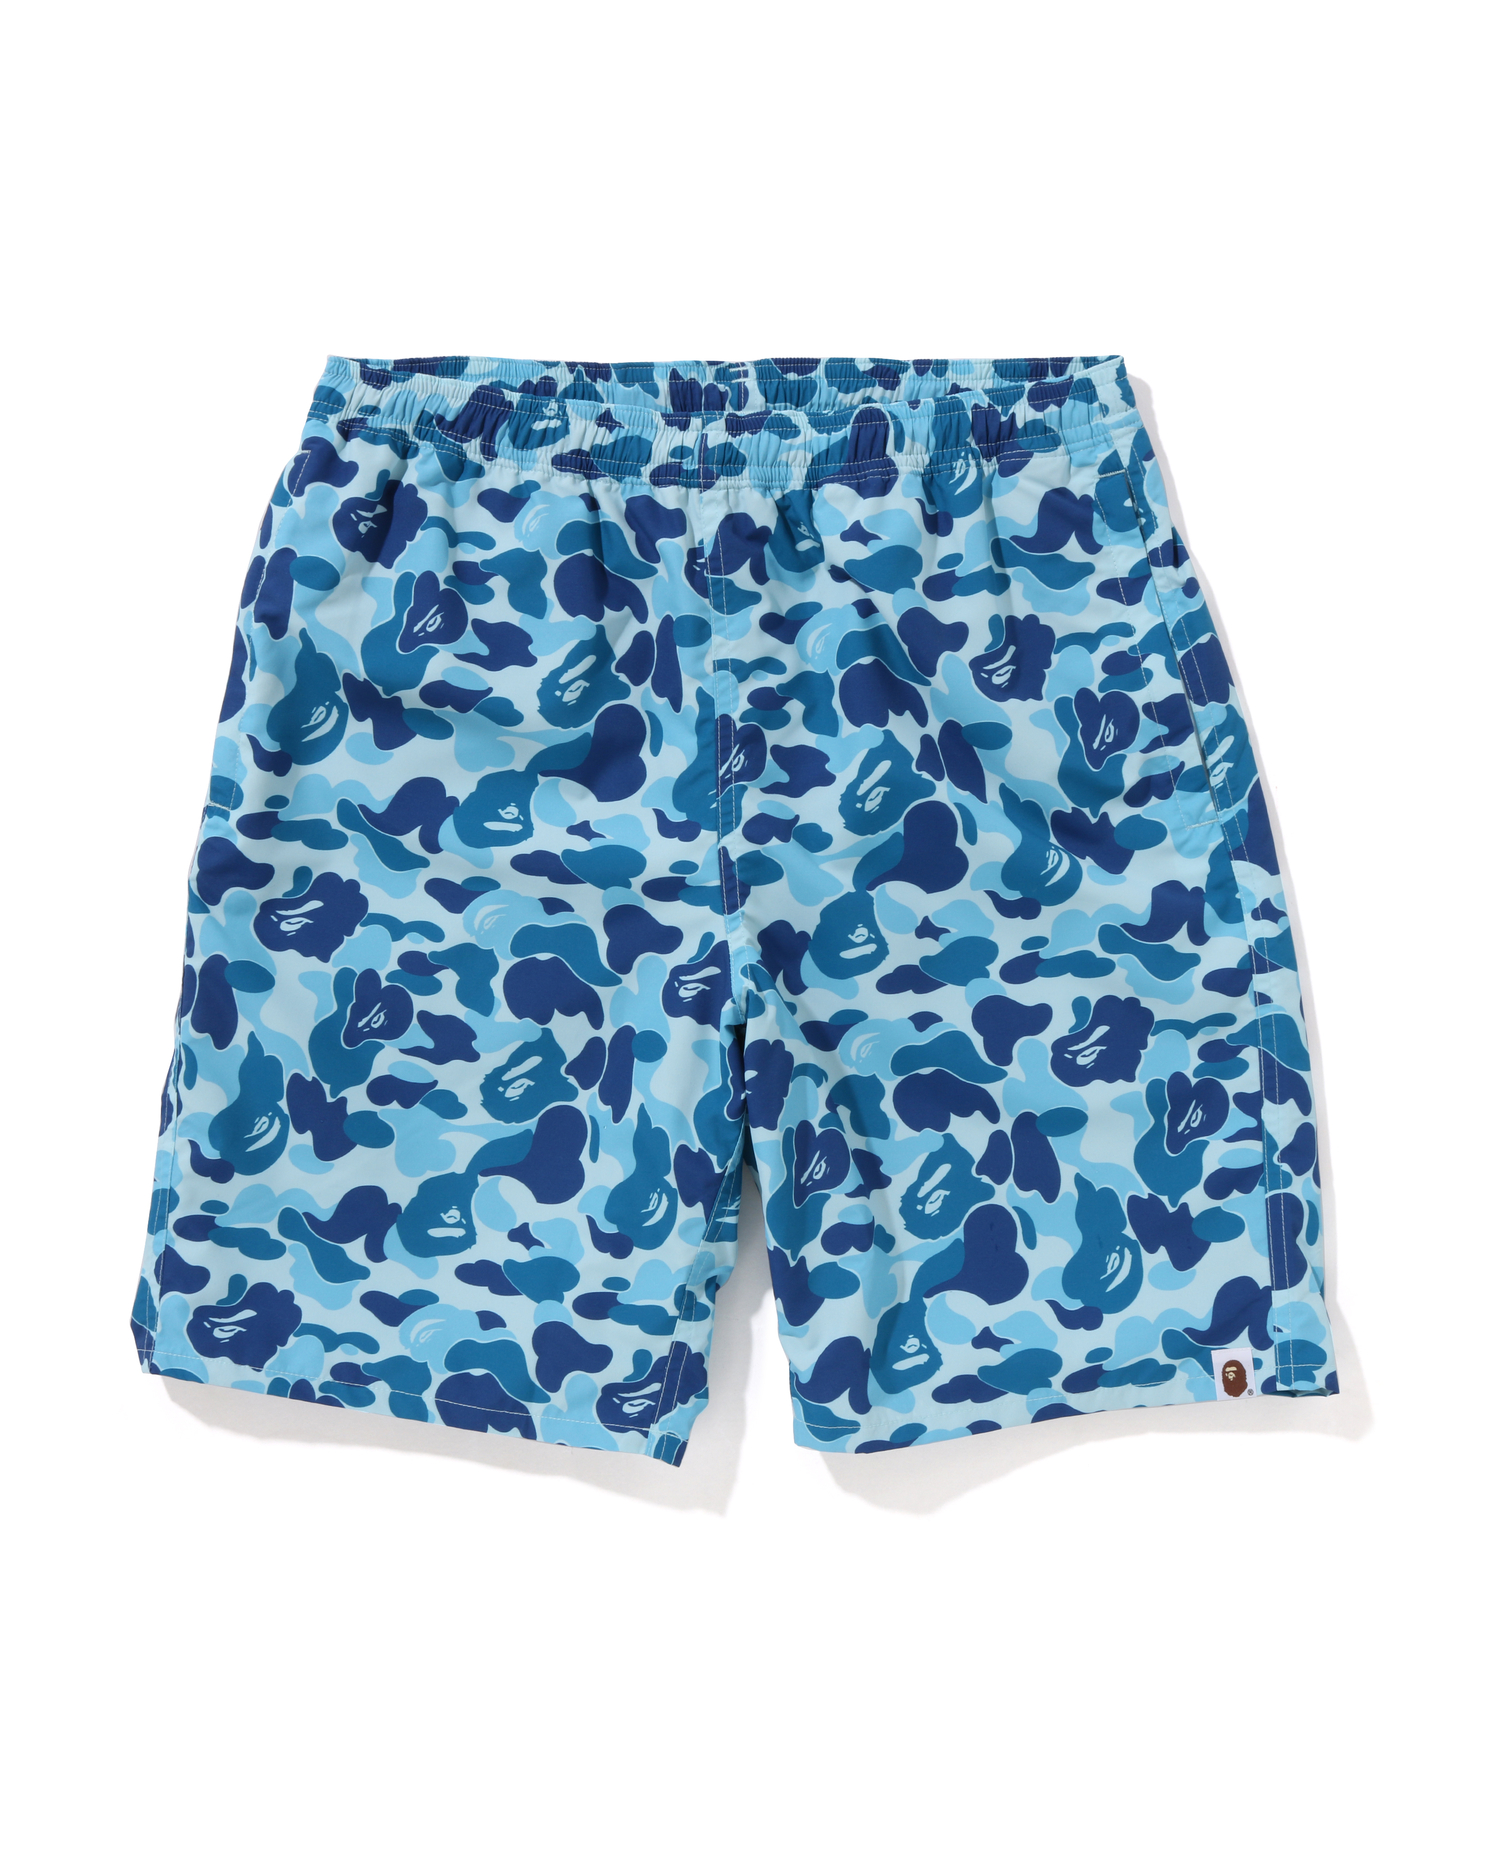 Shop ABC Camo Beach Shorts Online | BAPE